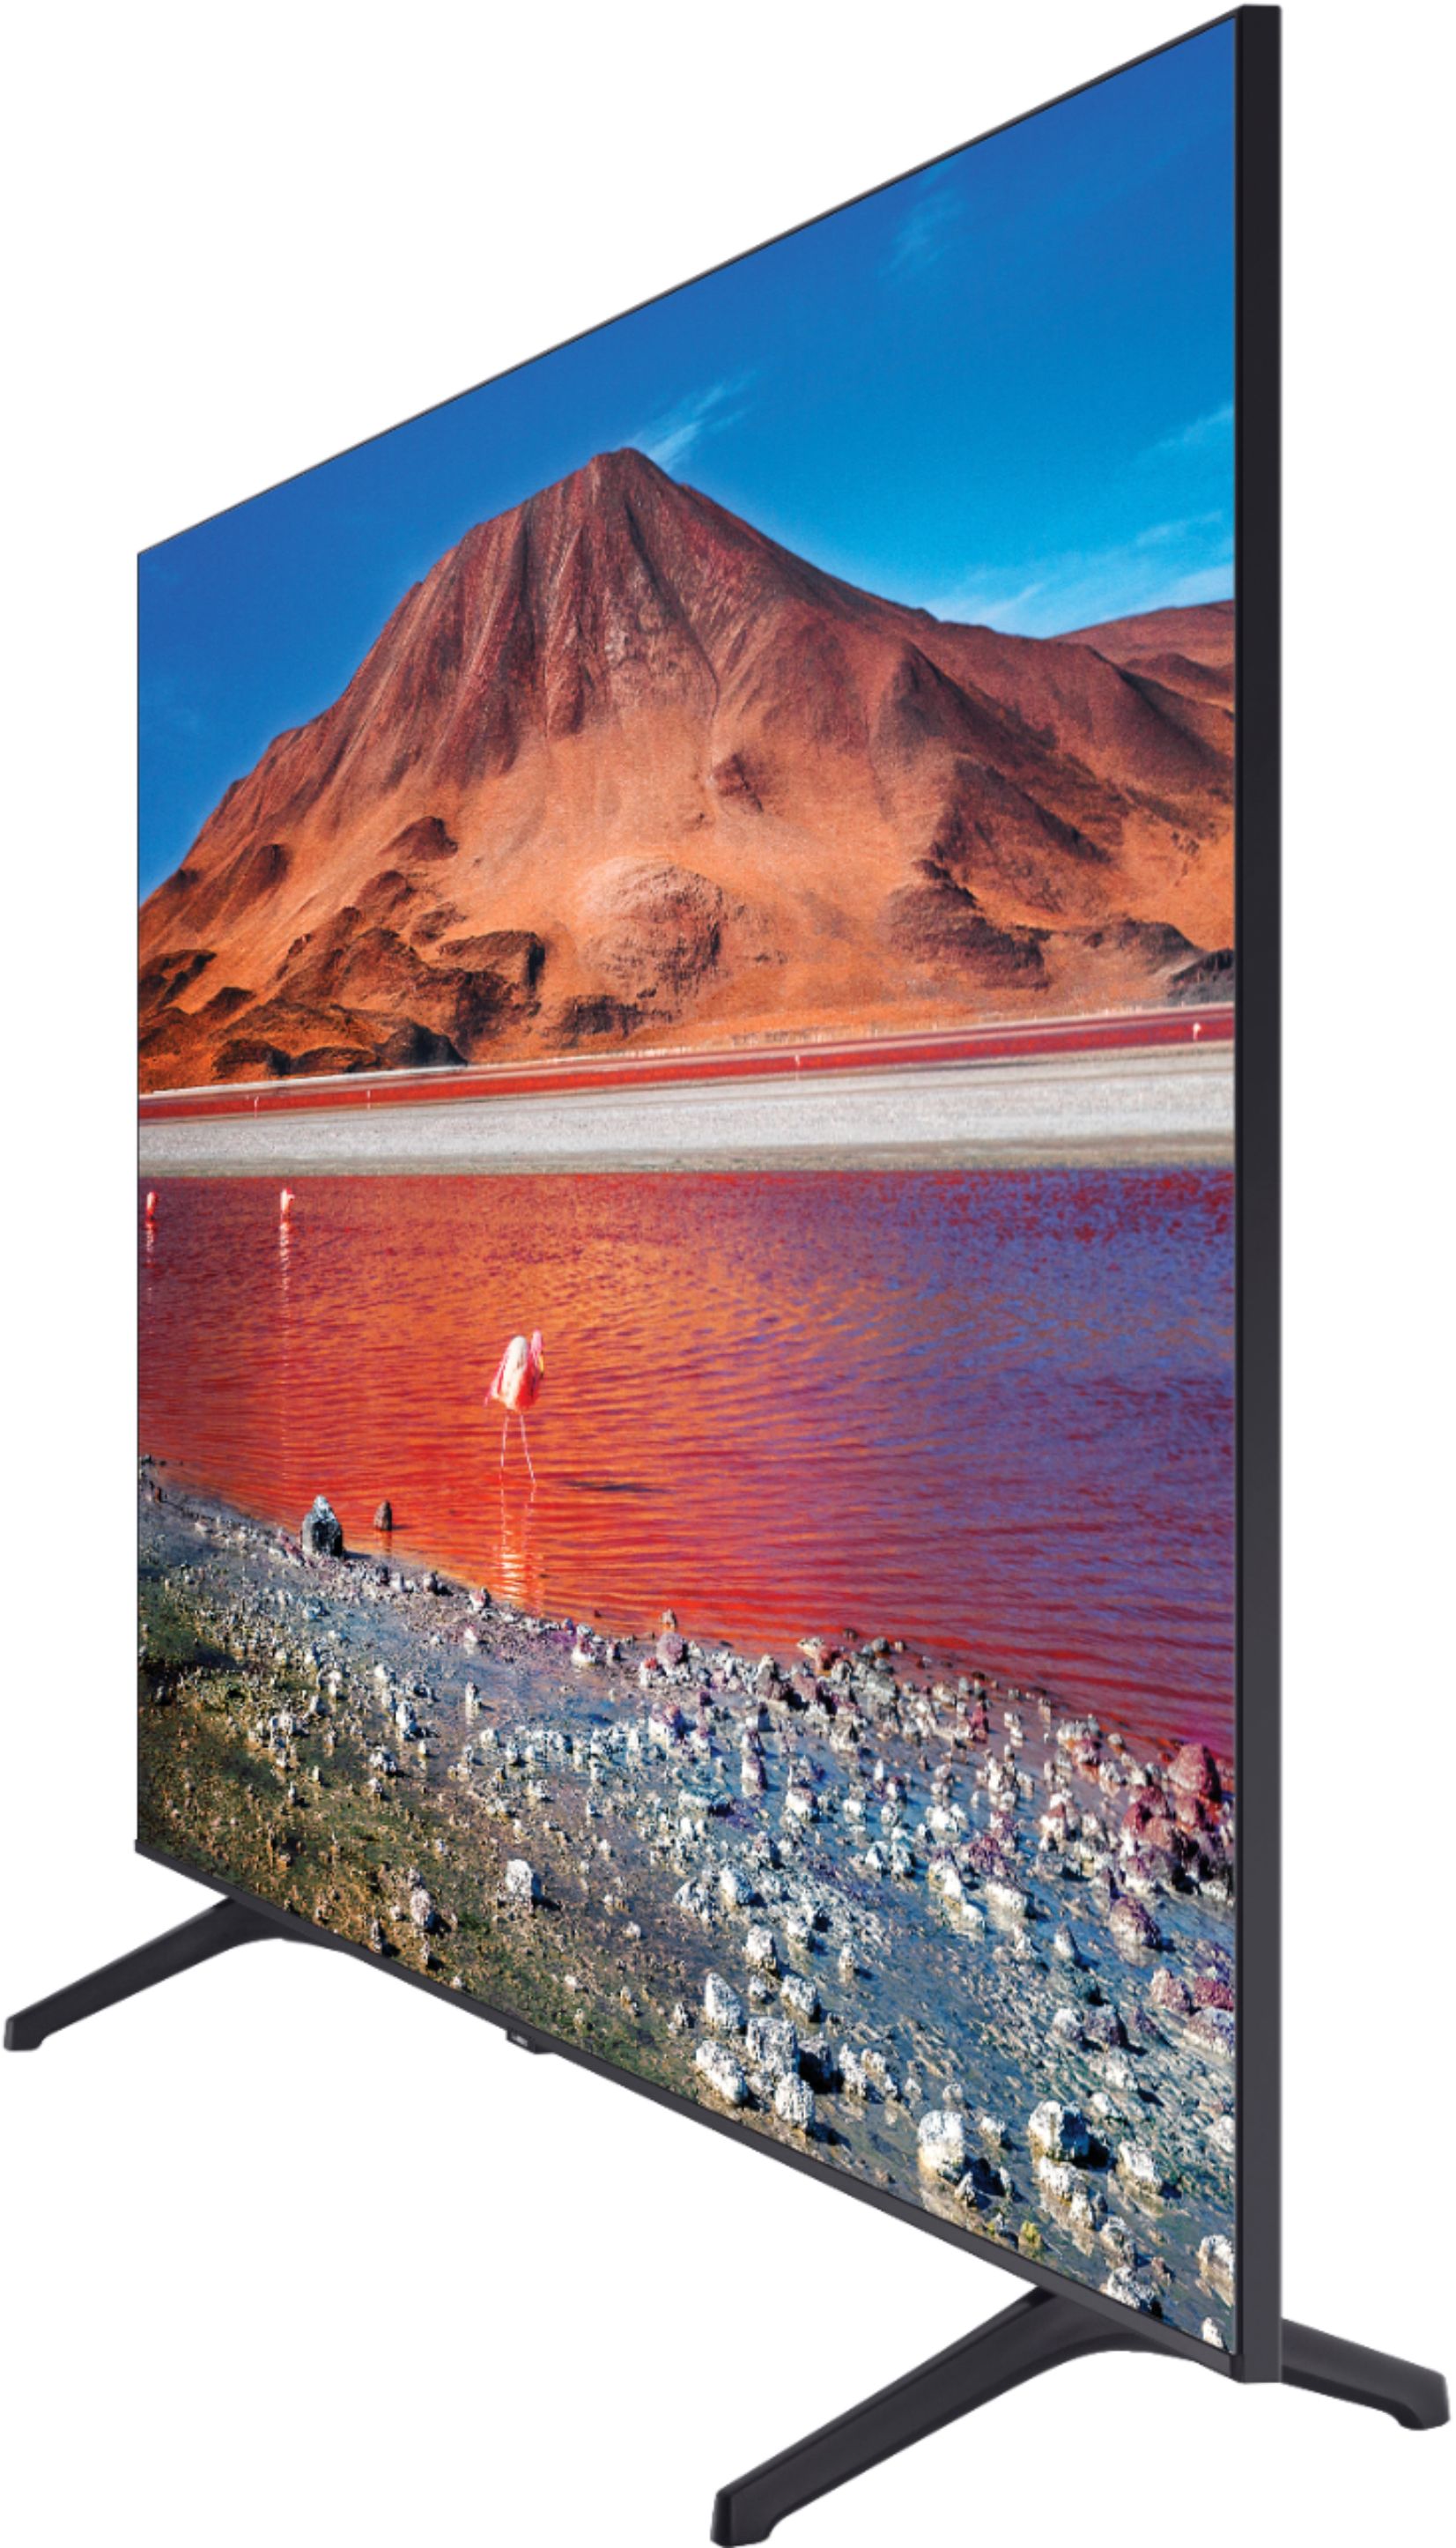 Class 7 Series LED UHD Smart Tizen TV UN65TU7000FXZA - Best Buy